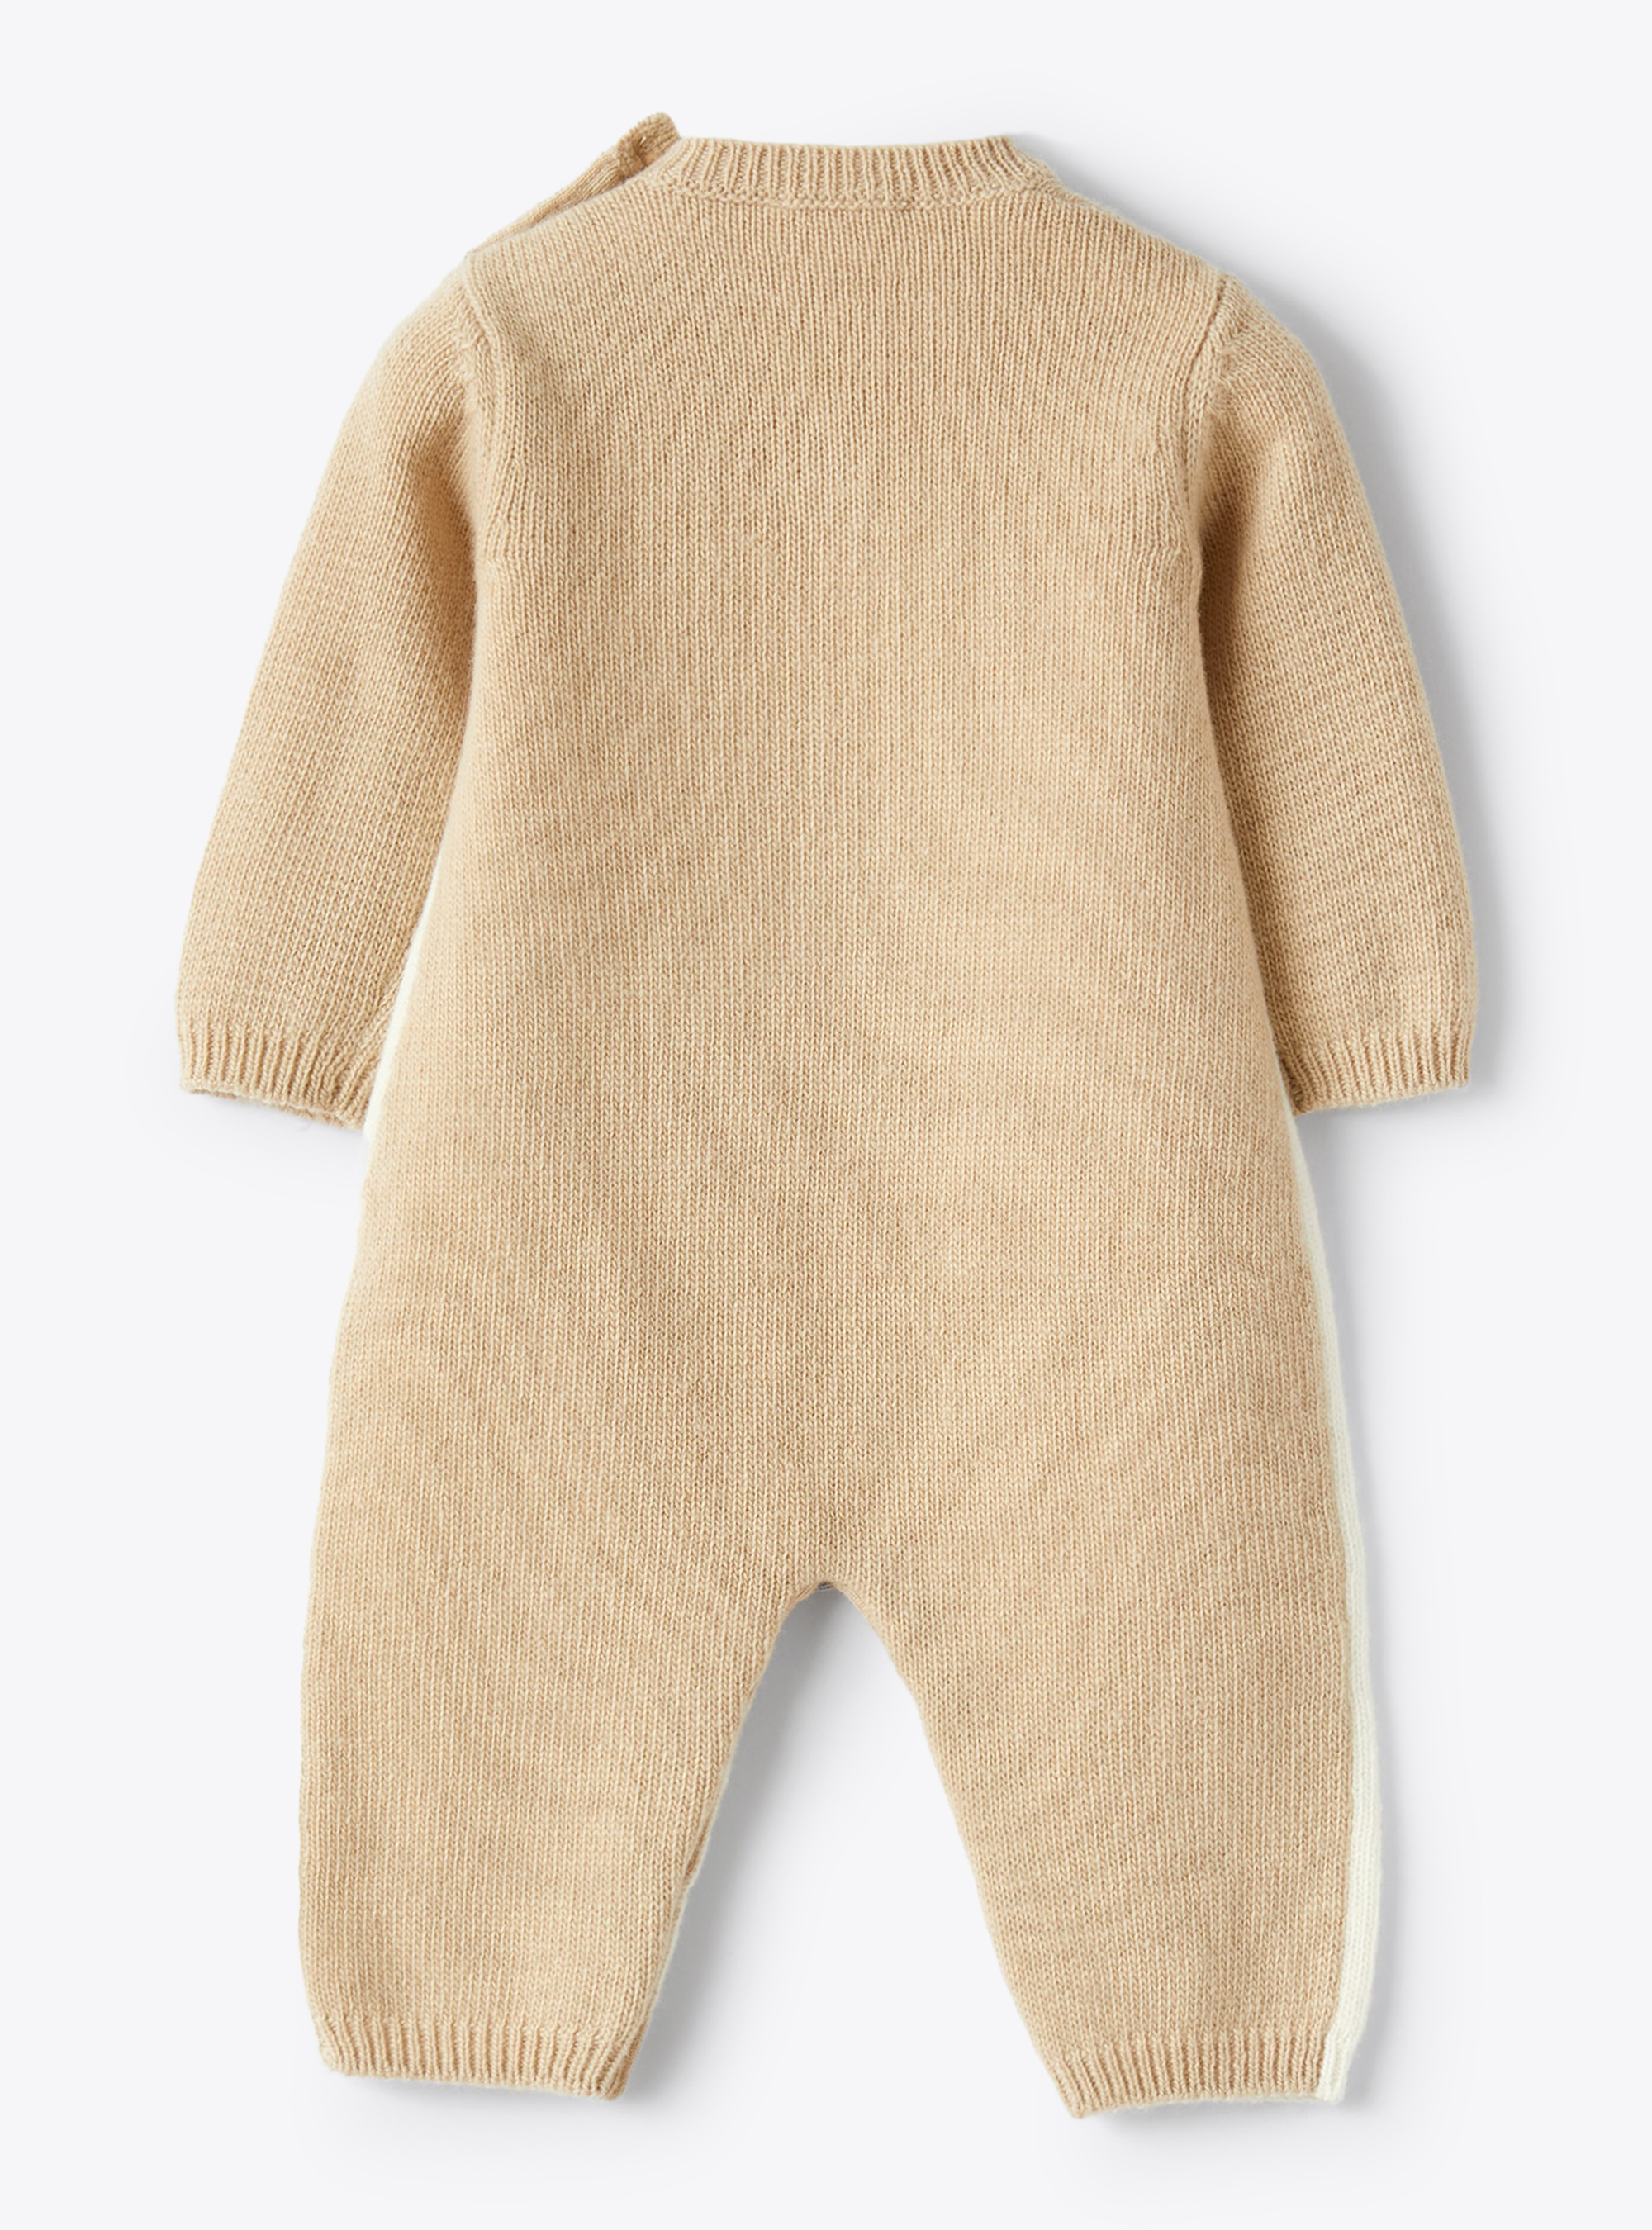 Tricot-knit babysuit with teddy bear motif - White | Il Gufo